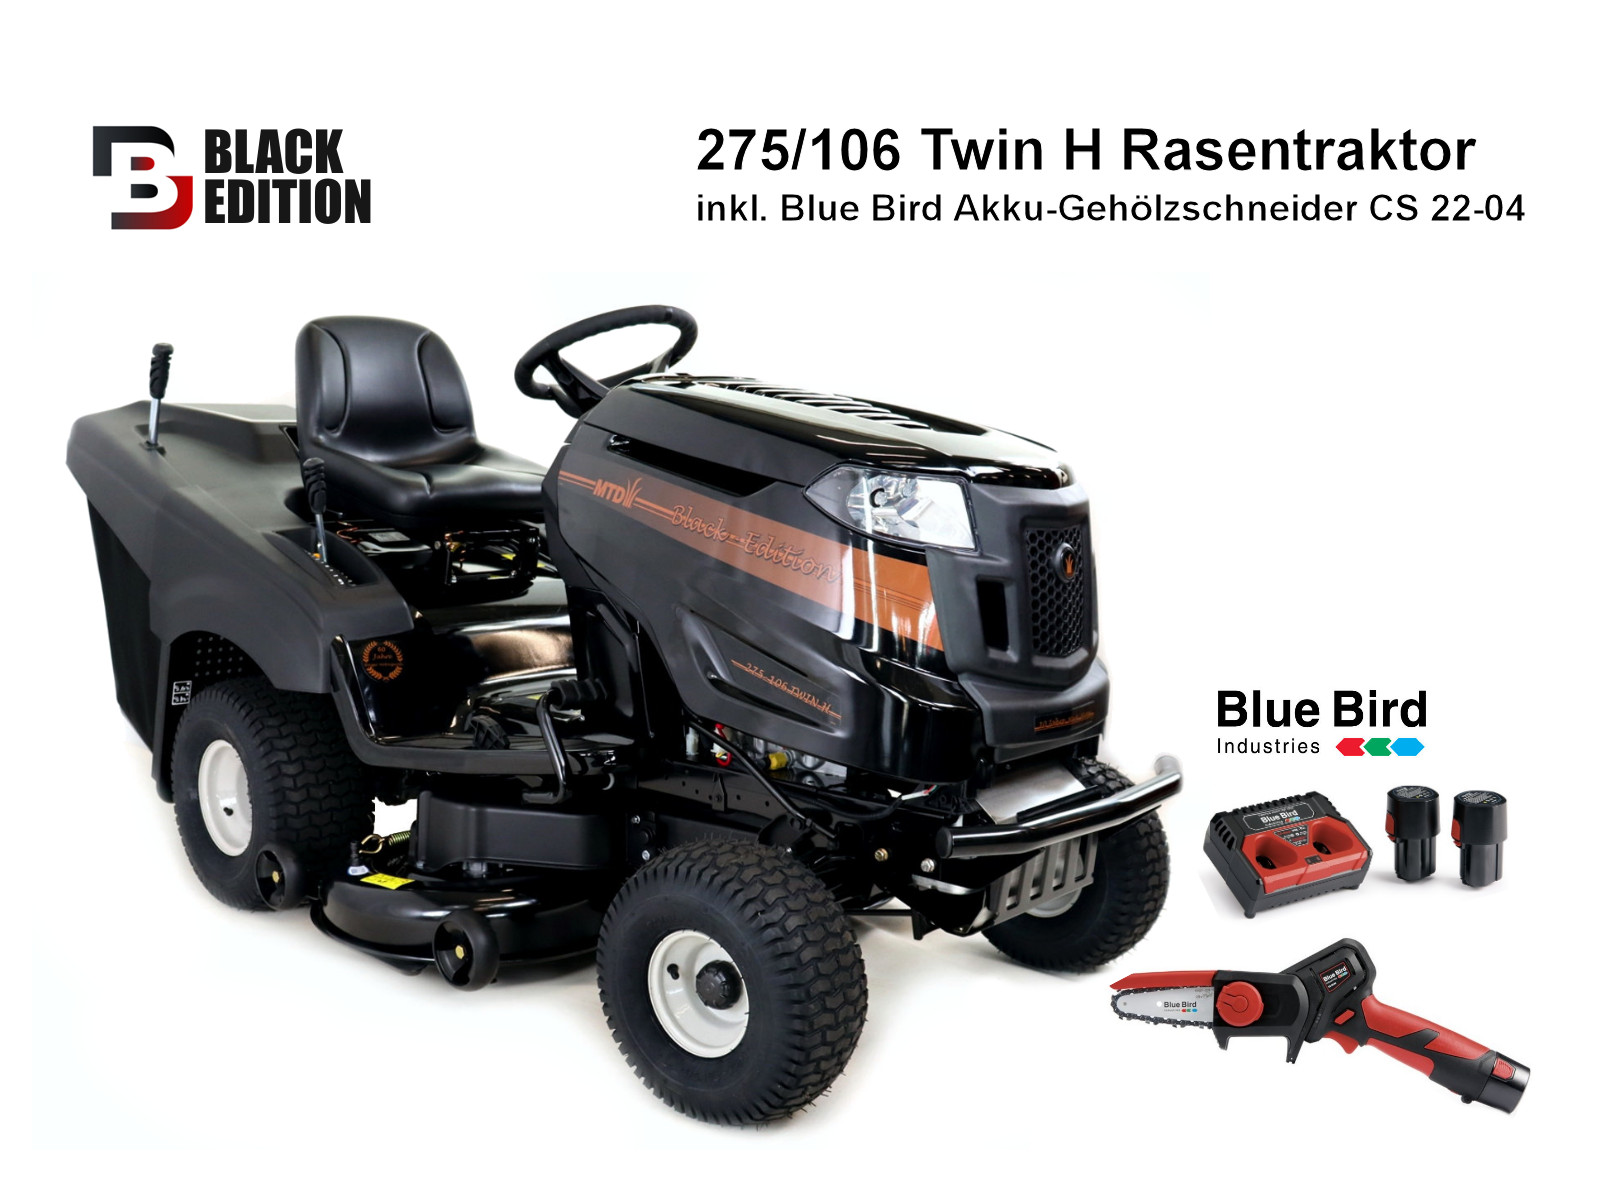 BLACK EDITION Rasentraktor® 275/106 TWIN Hydrostat mit Fangkorb inkl. Akku  Gehölzschneider | Börger Motorgeräte GmbH